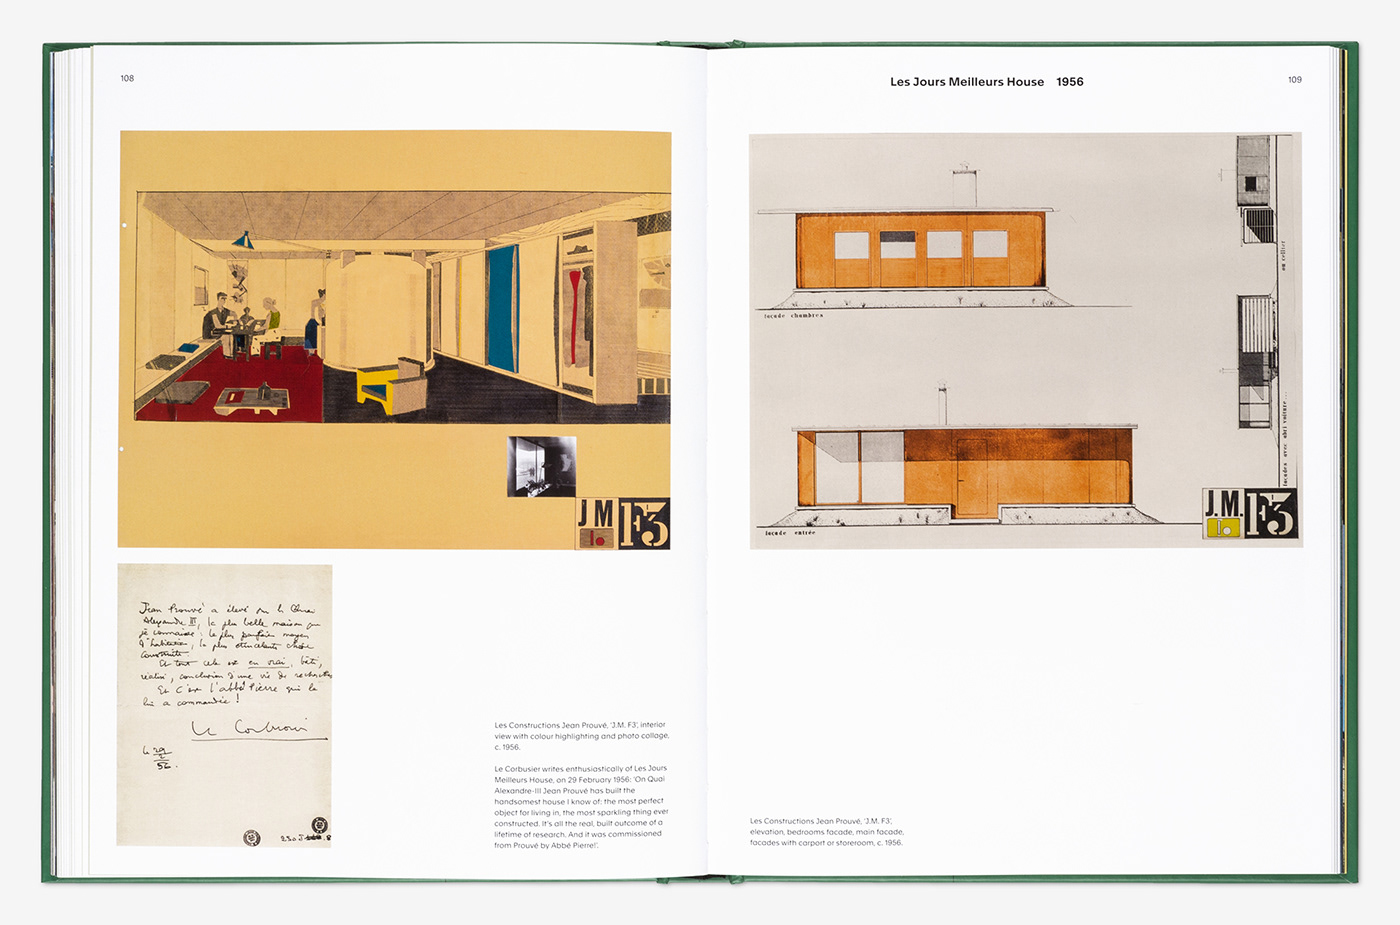 graphic design  book design book architecture typography   type green editorial design  Jean Prouvé phaidon